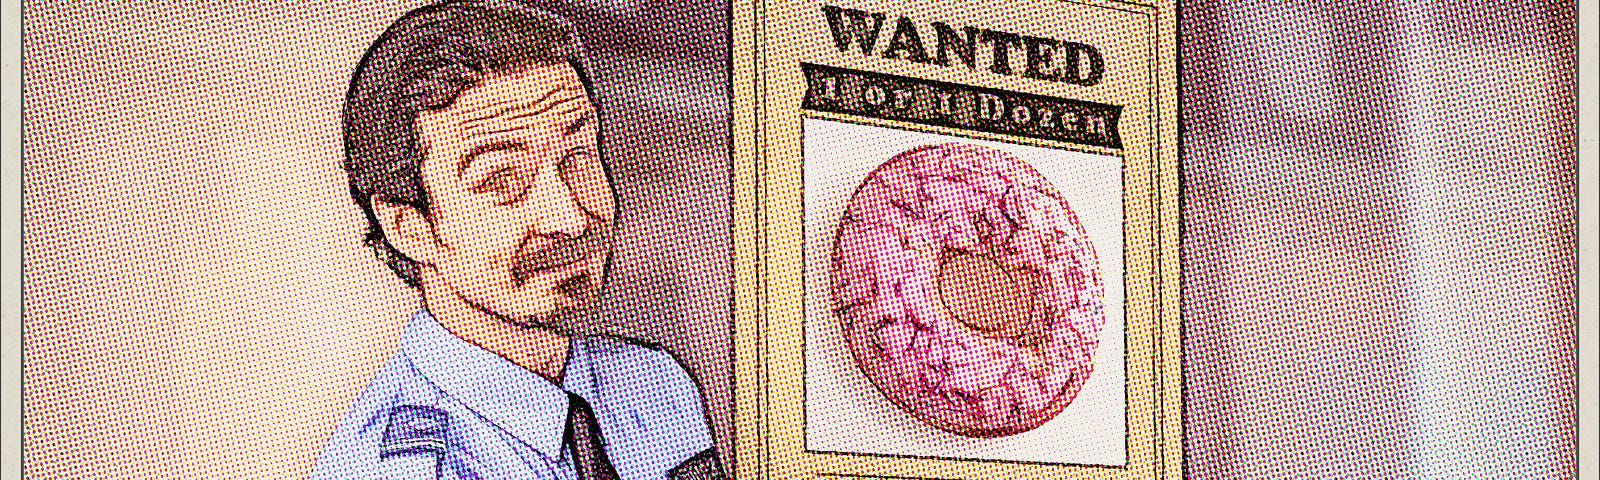 Cop eyeing donut poster